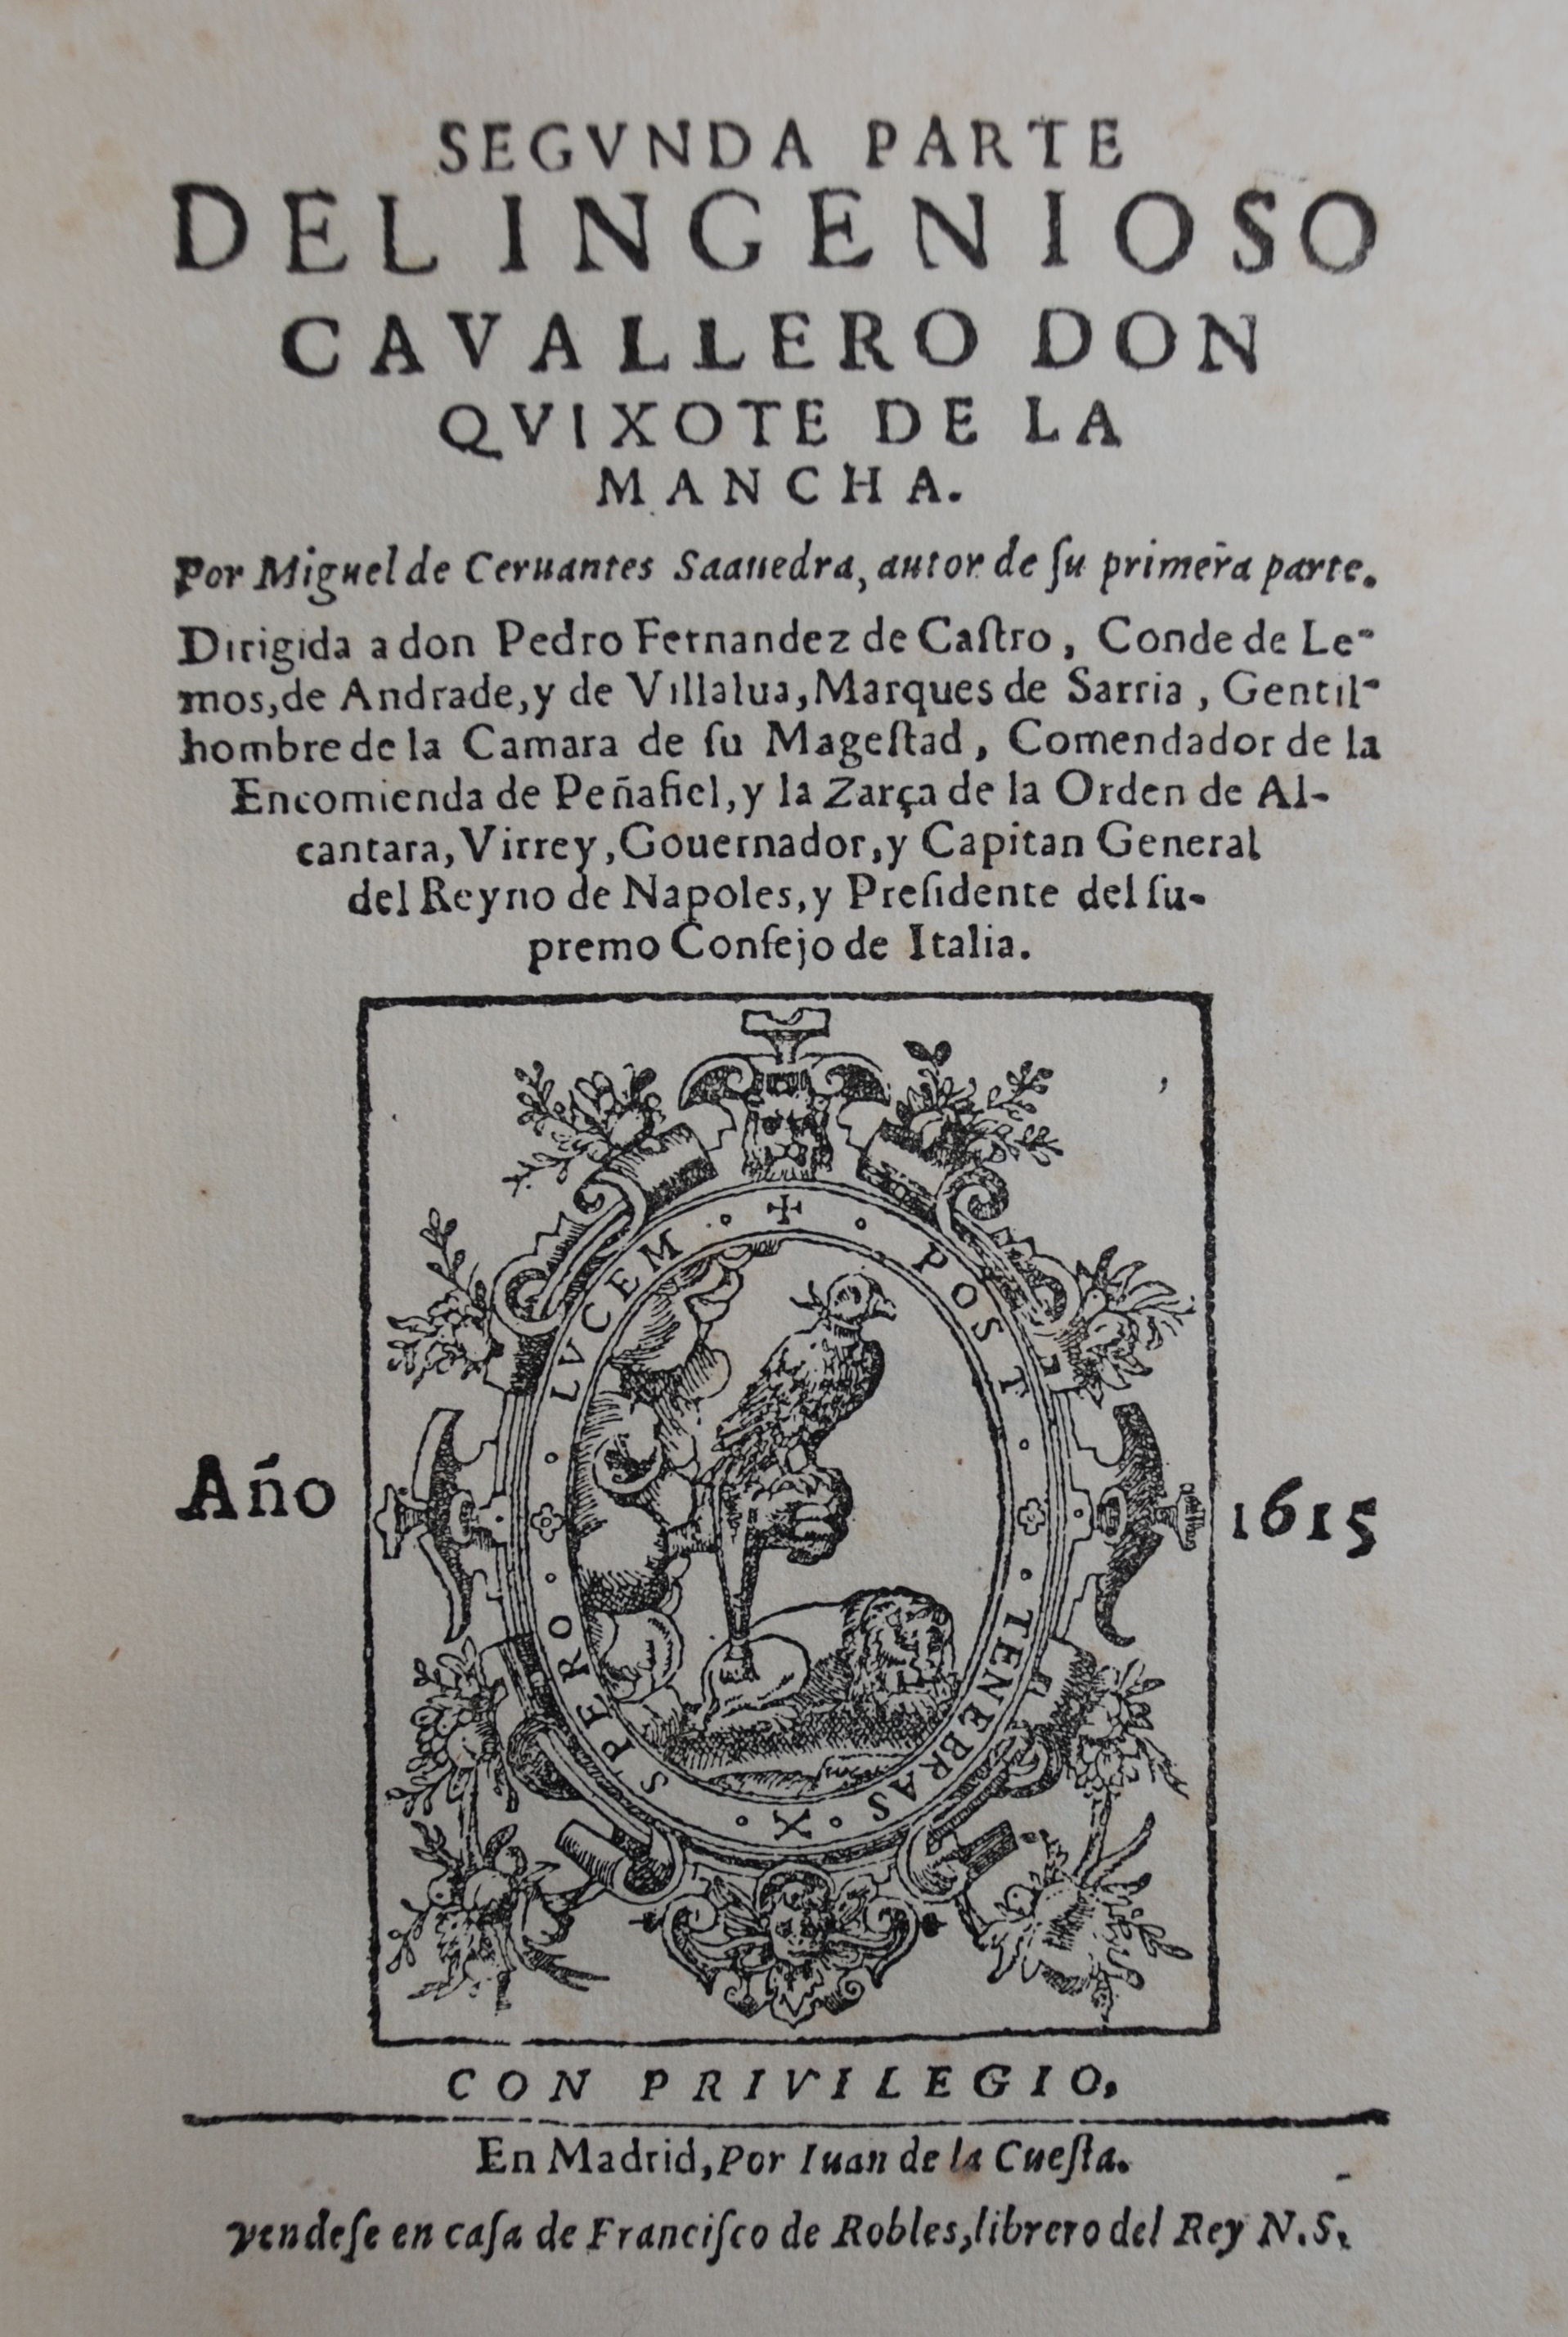 Title page of facsimile edition of Don Quixote